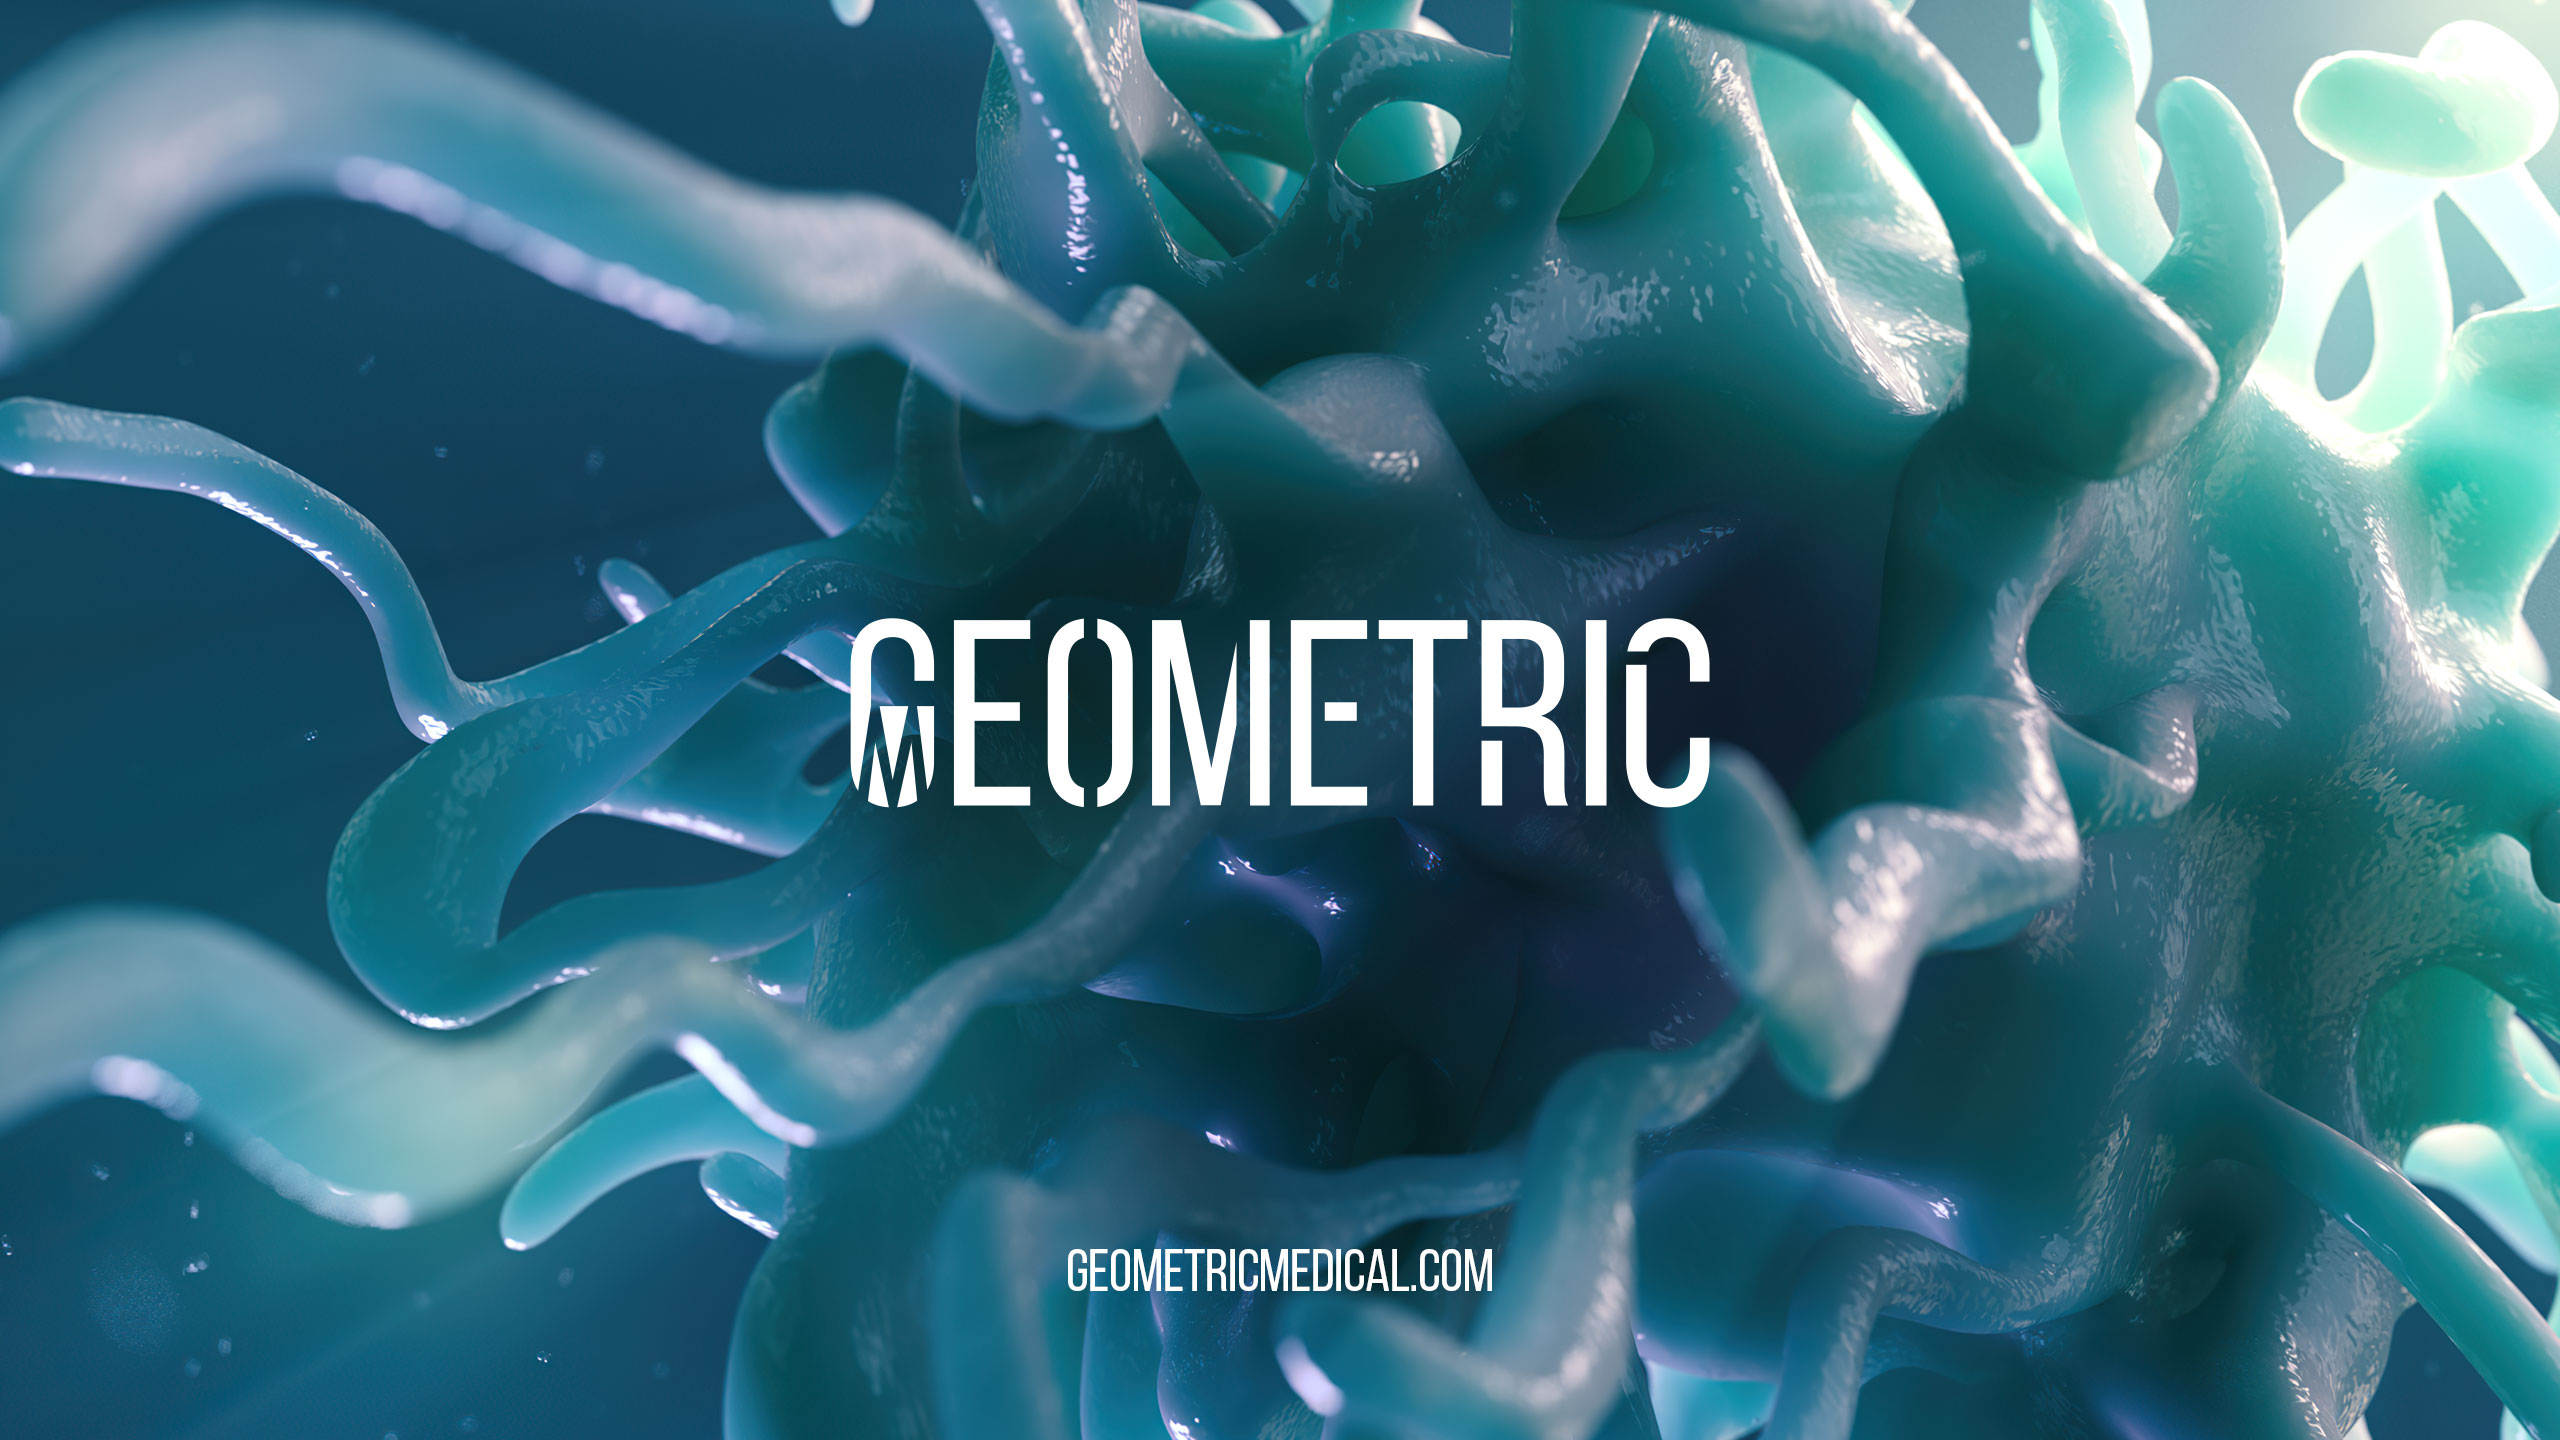 3D Medical Animation Company | Geometric Medical